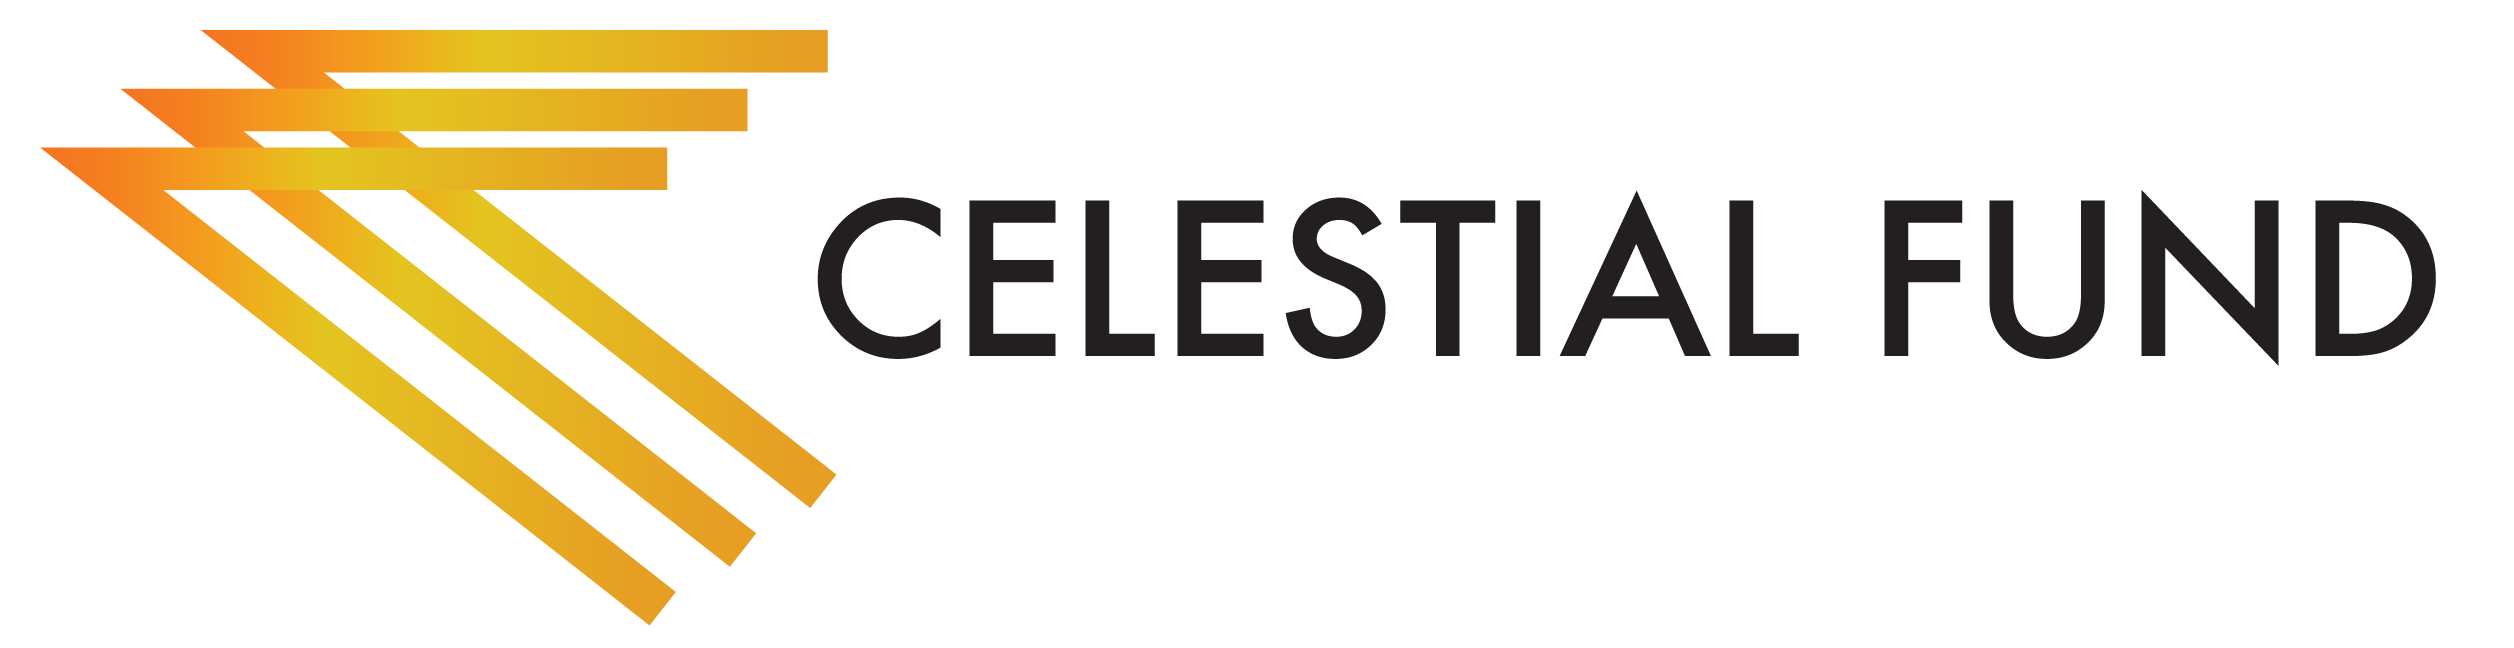 celestial logo 01 South Florida Multifamily & Mixed Use Forum